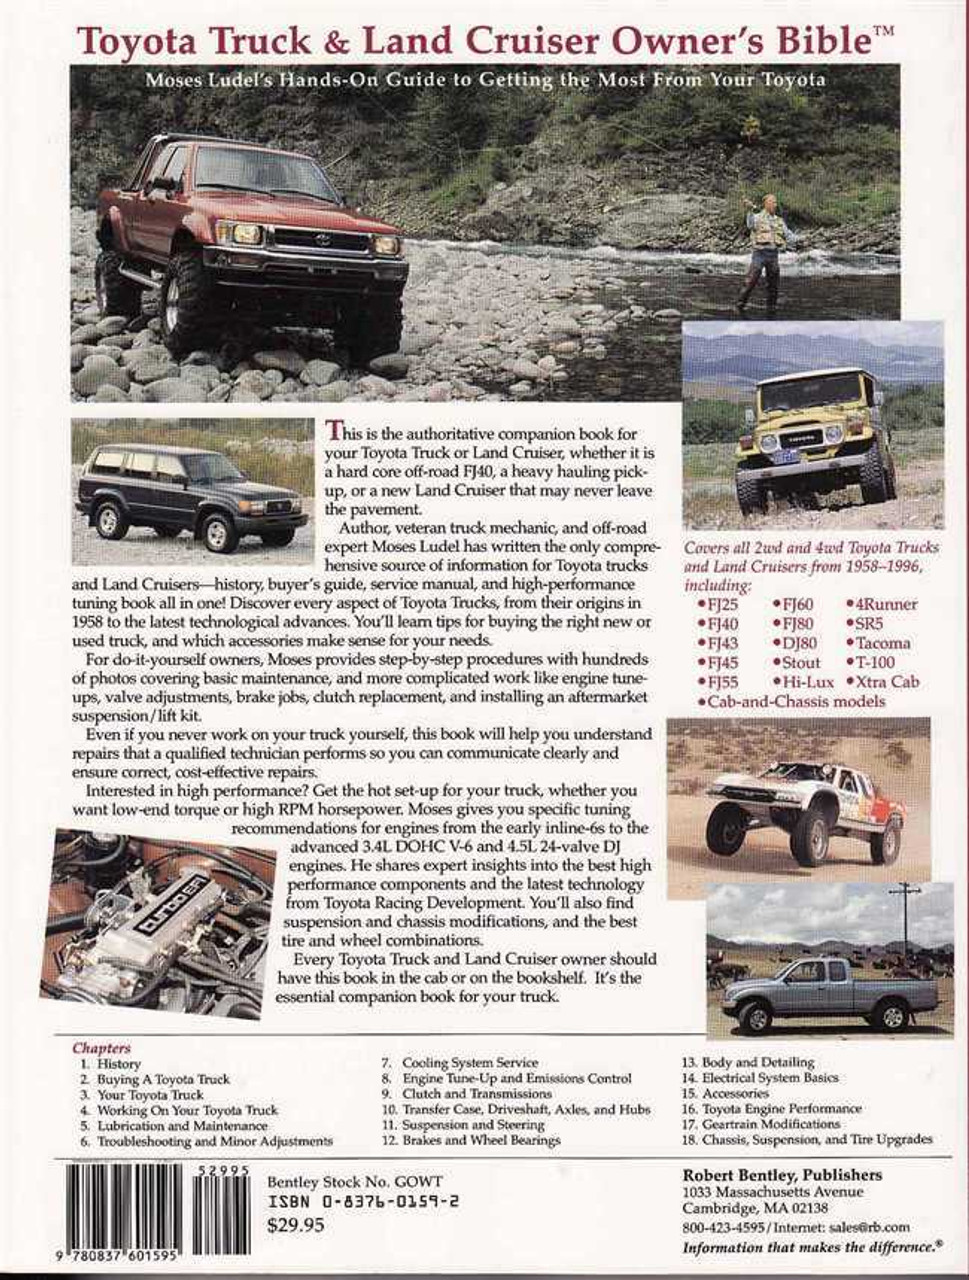 The Toyota Land Cruiser: The Story of a Legendary 4x4: Fryatt, Nigel:  9781445671734: : Books